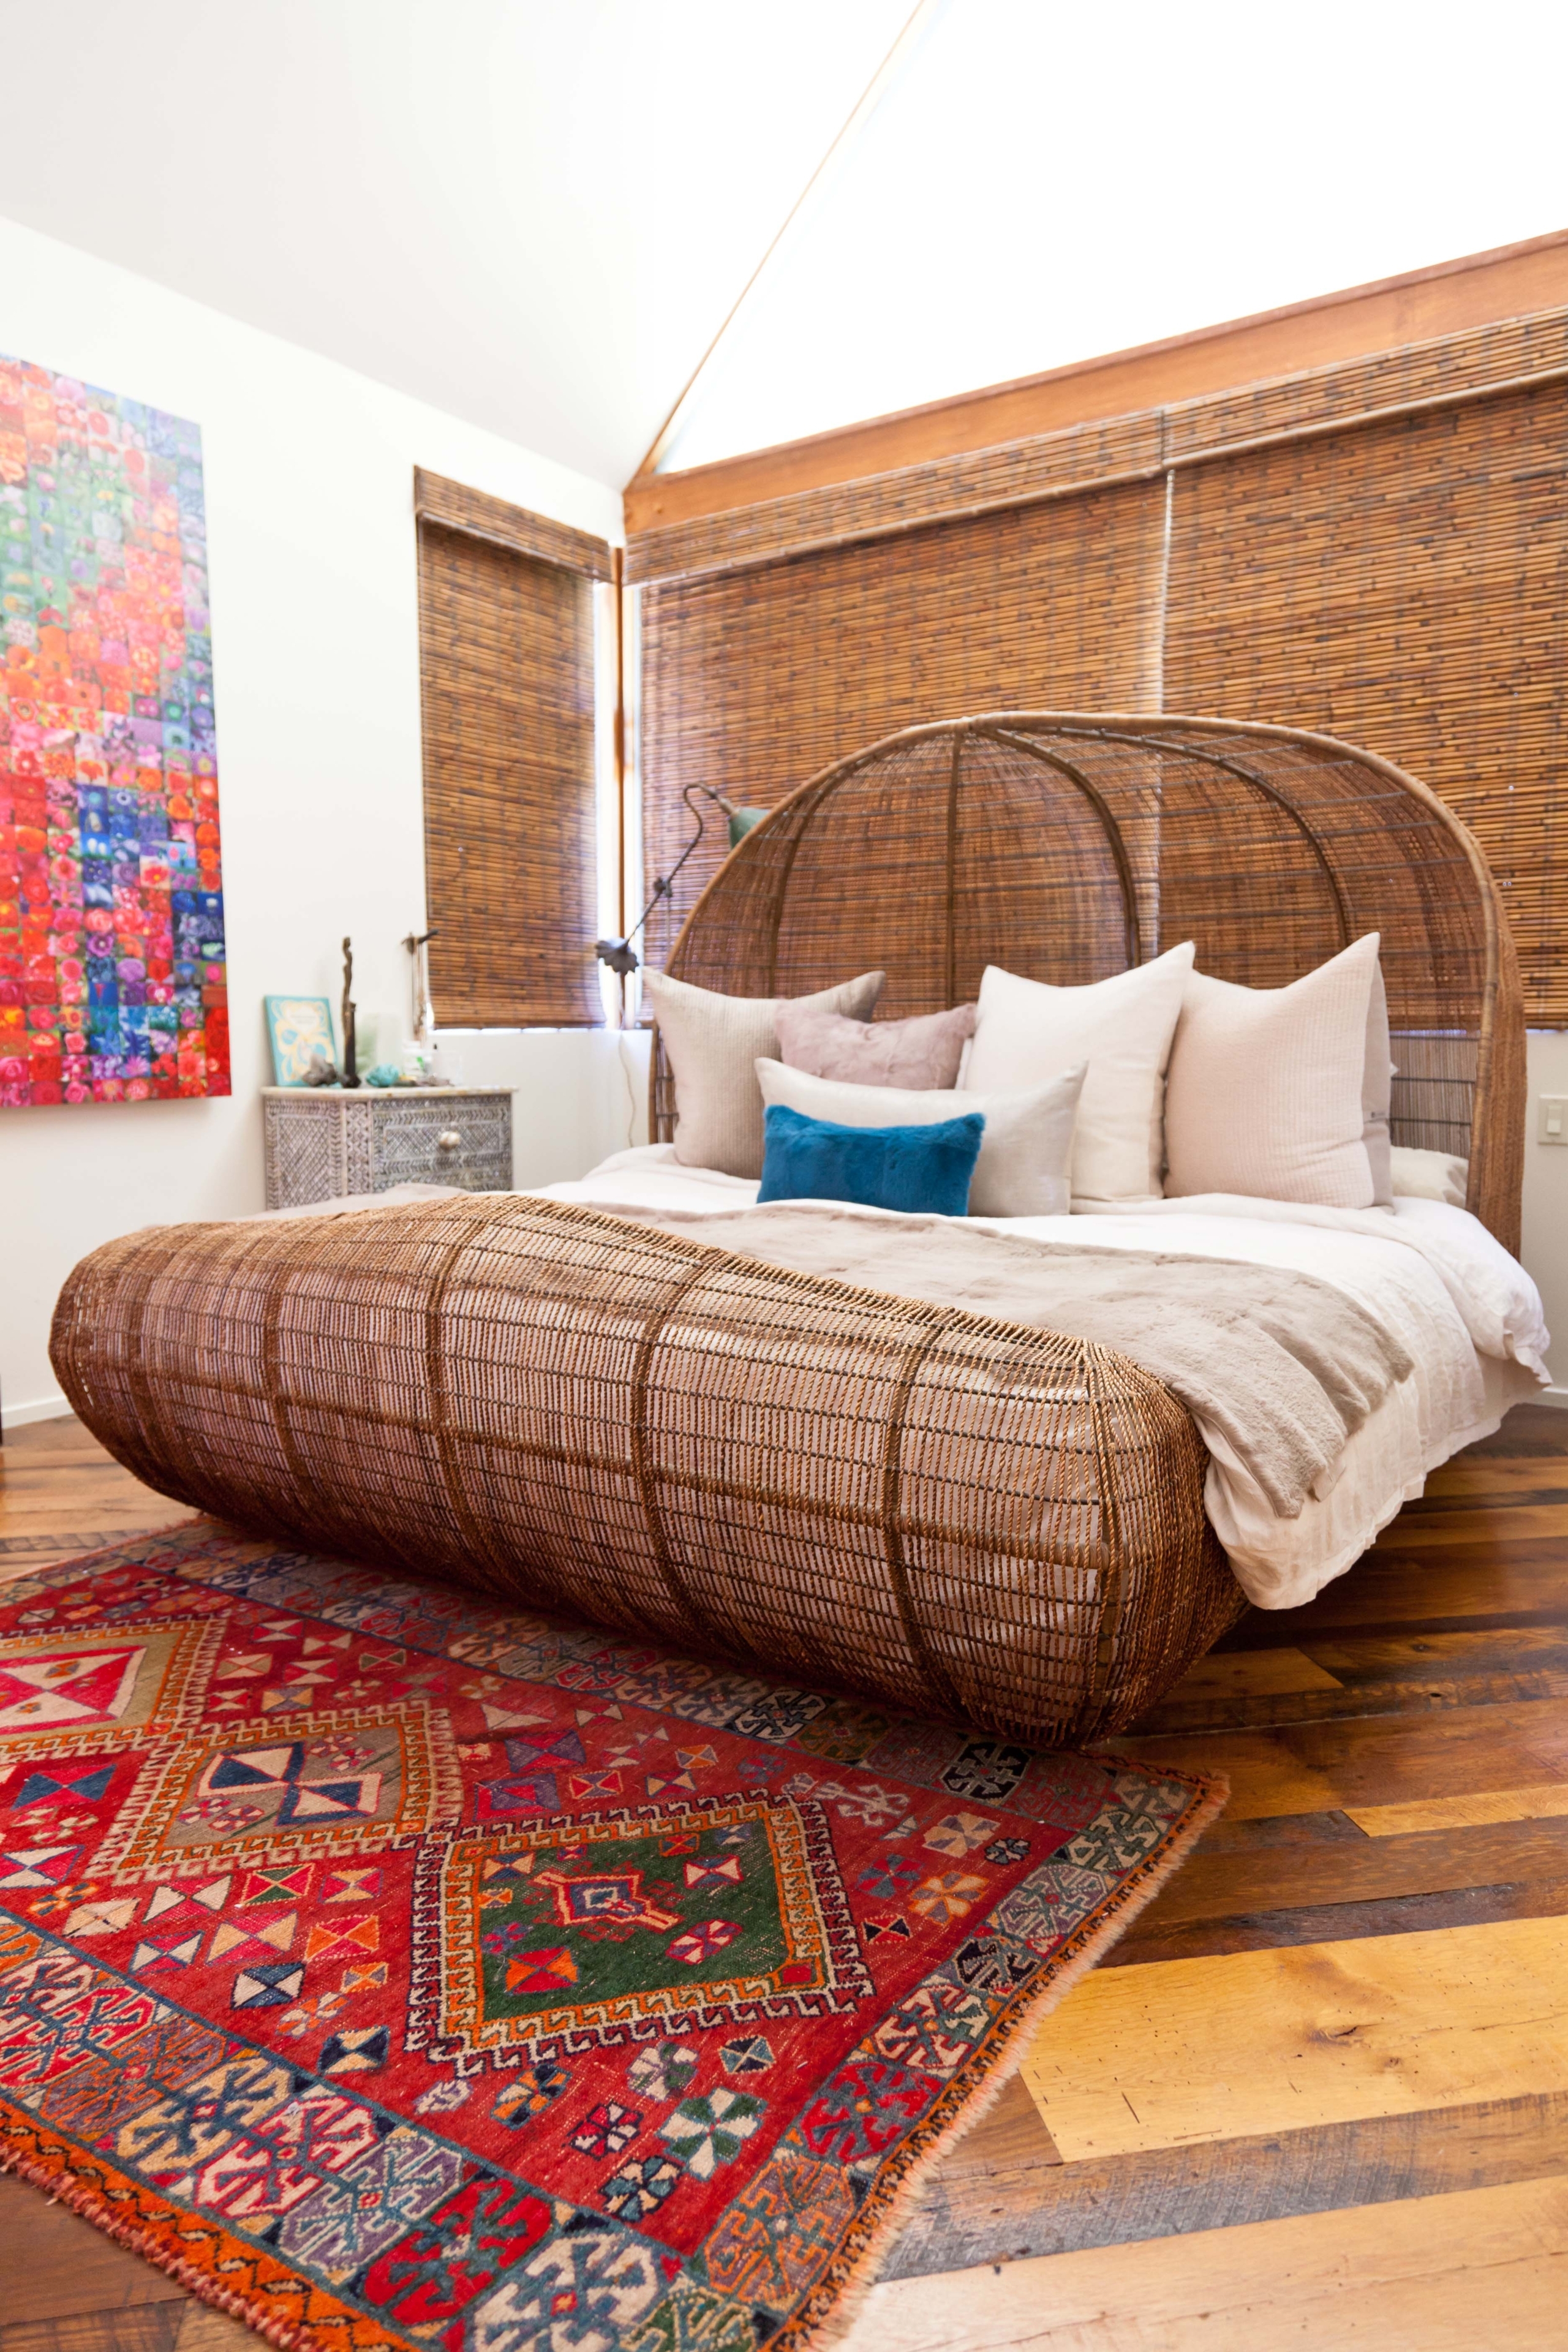 Rattan Bedroom Furniture Ideas On Foter